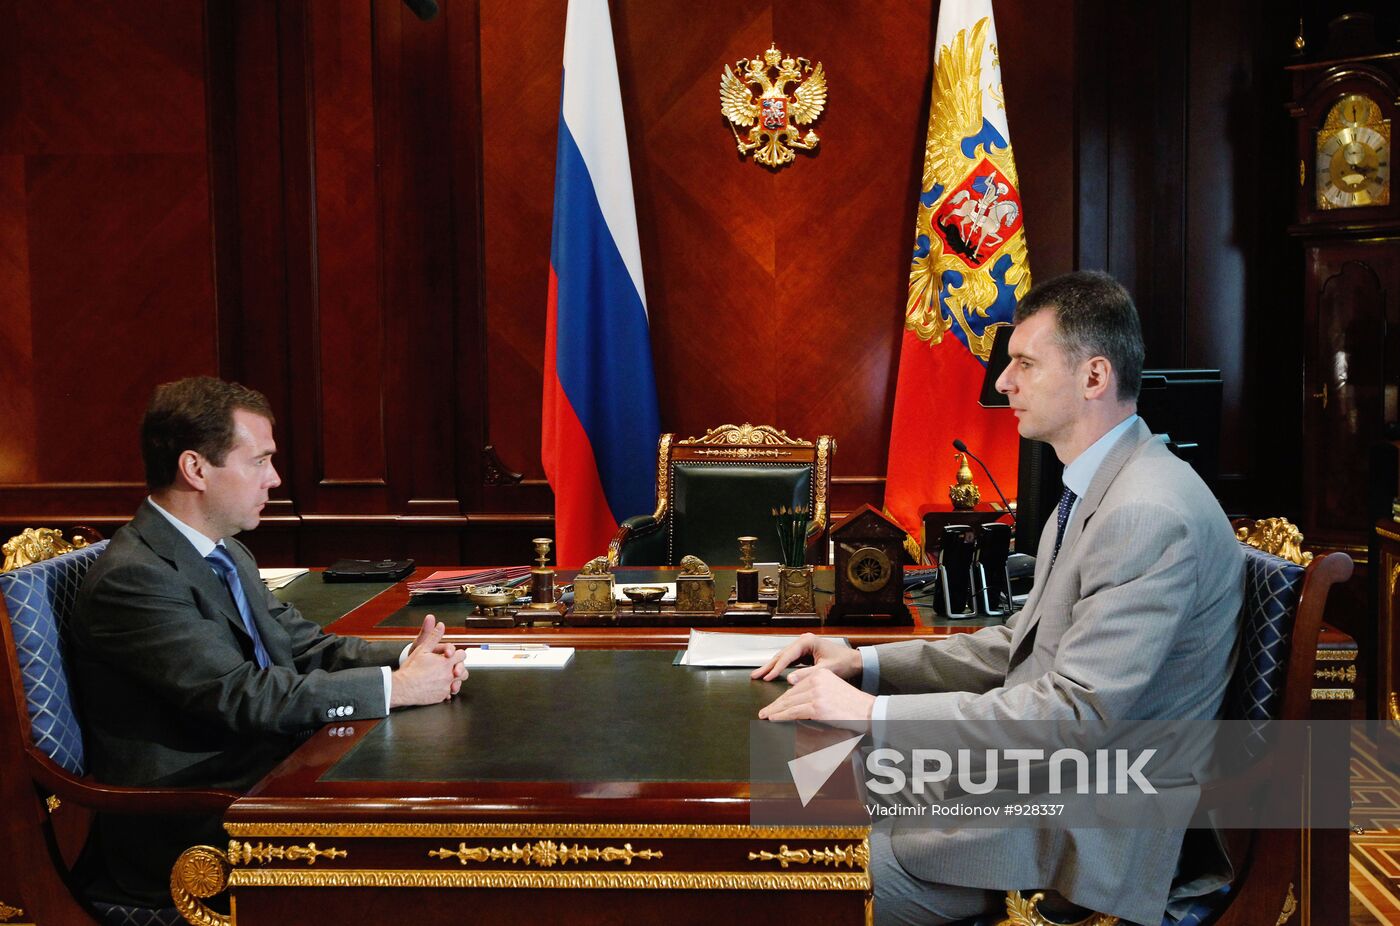 President Dmitry Medvedev meets with Mikhail Prokhorov